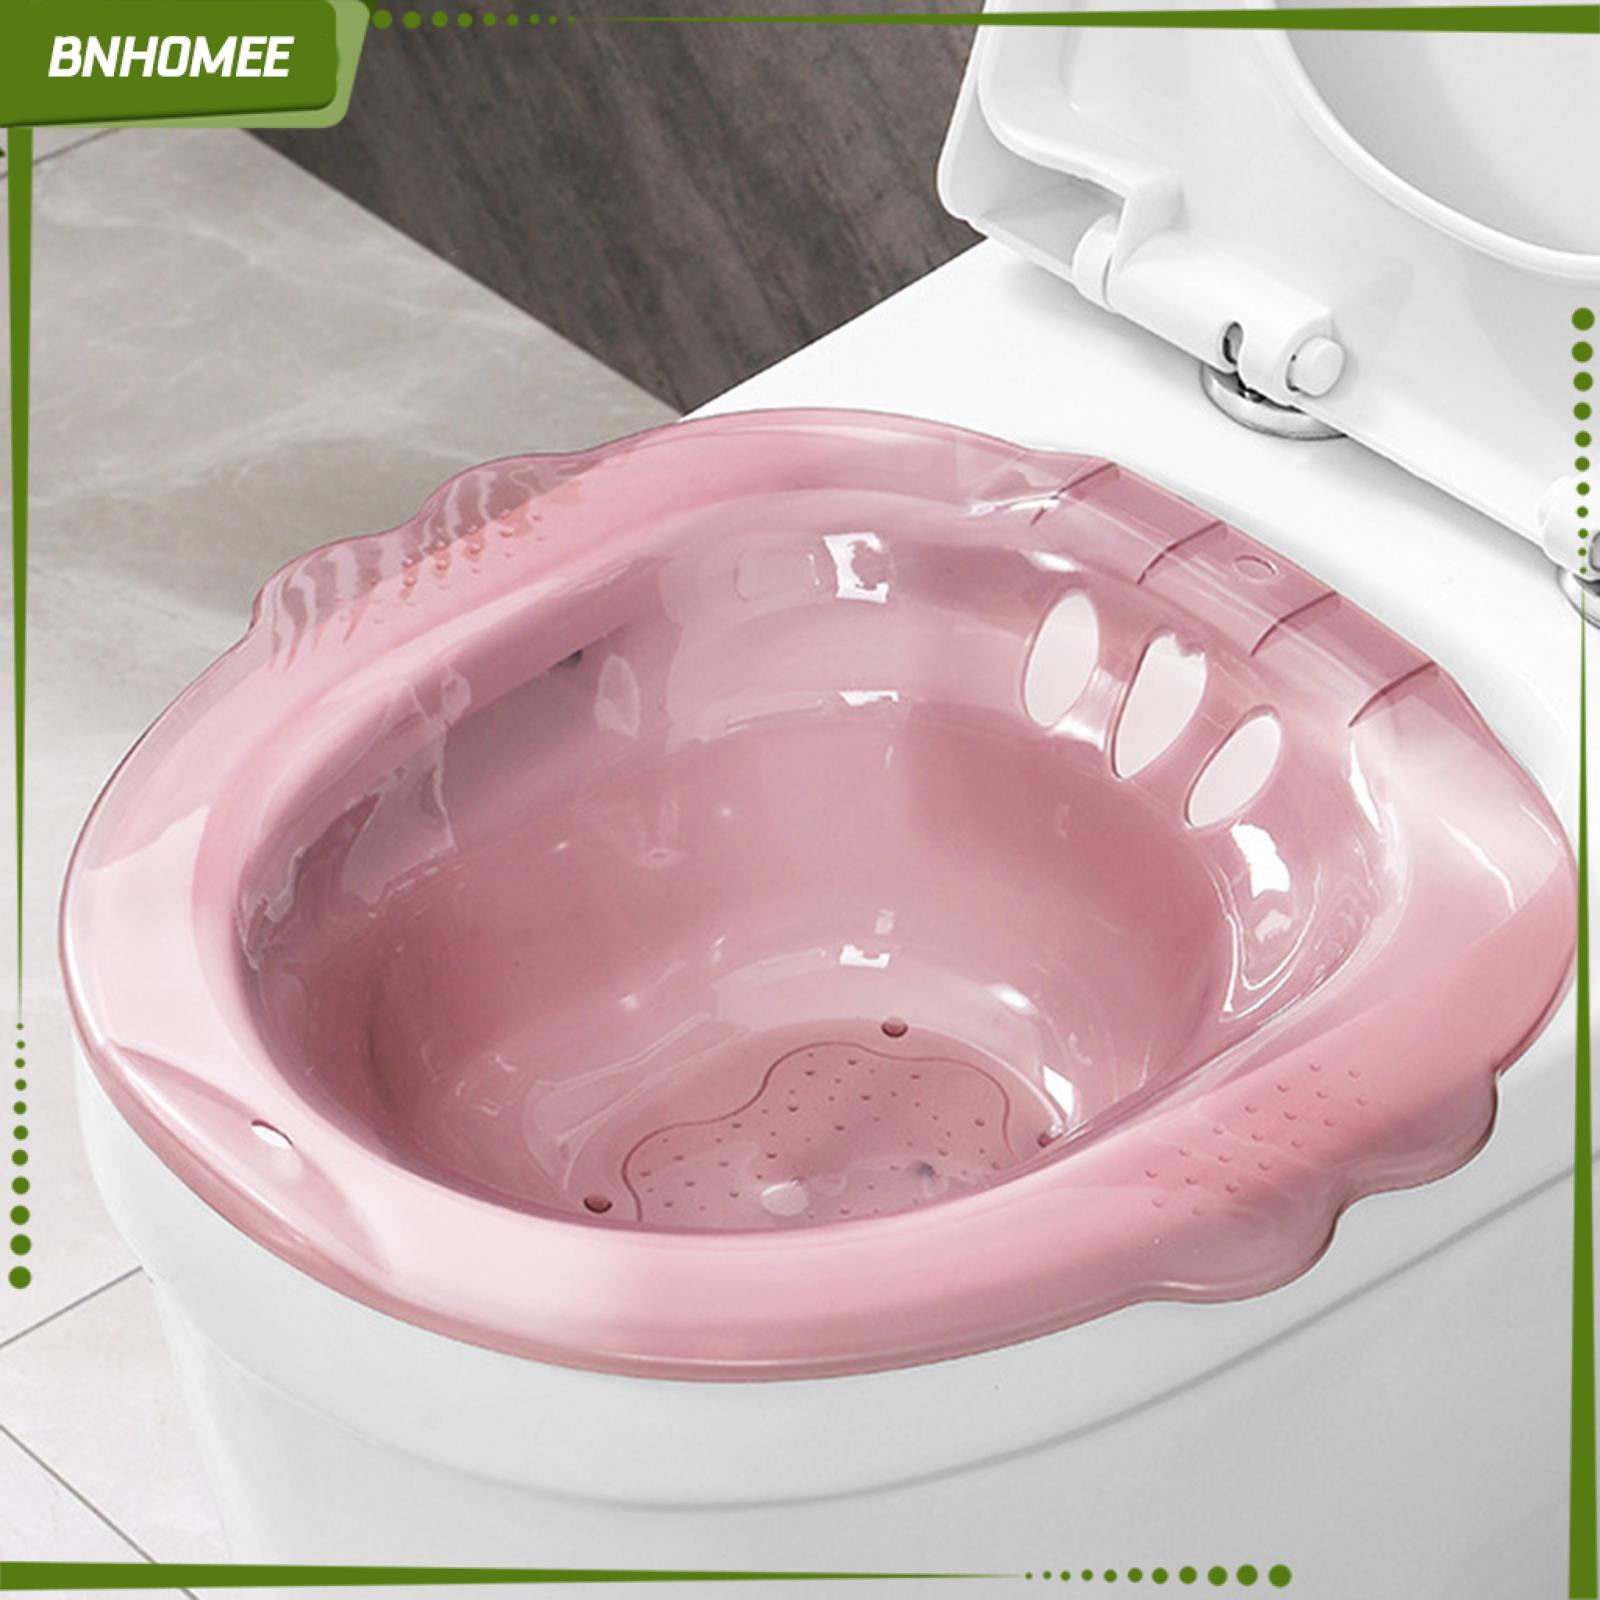 BNHOMEE Toilet Seat Sitz Bath Women Bidet Hip Bath Anti Slip Accessories Versatile with Flusher for Standard Toilets and Commode Chair